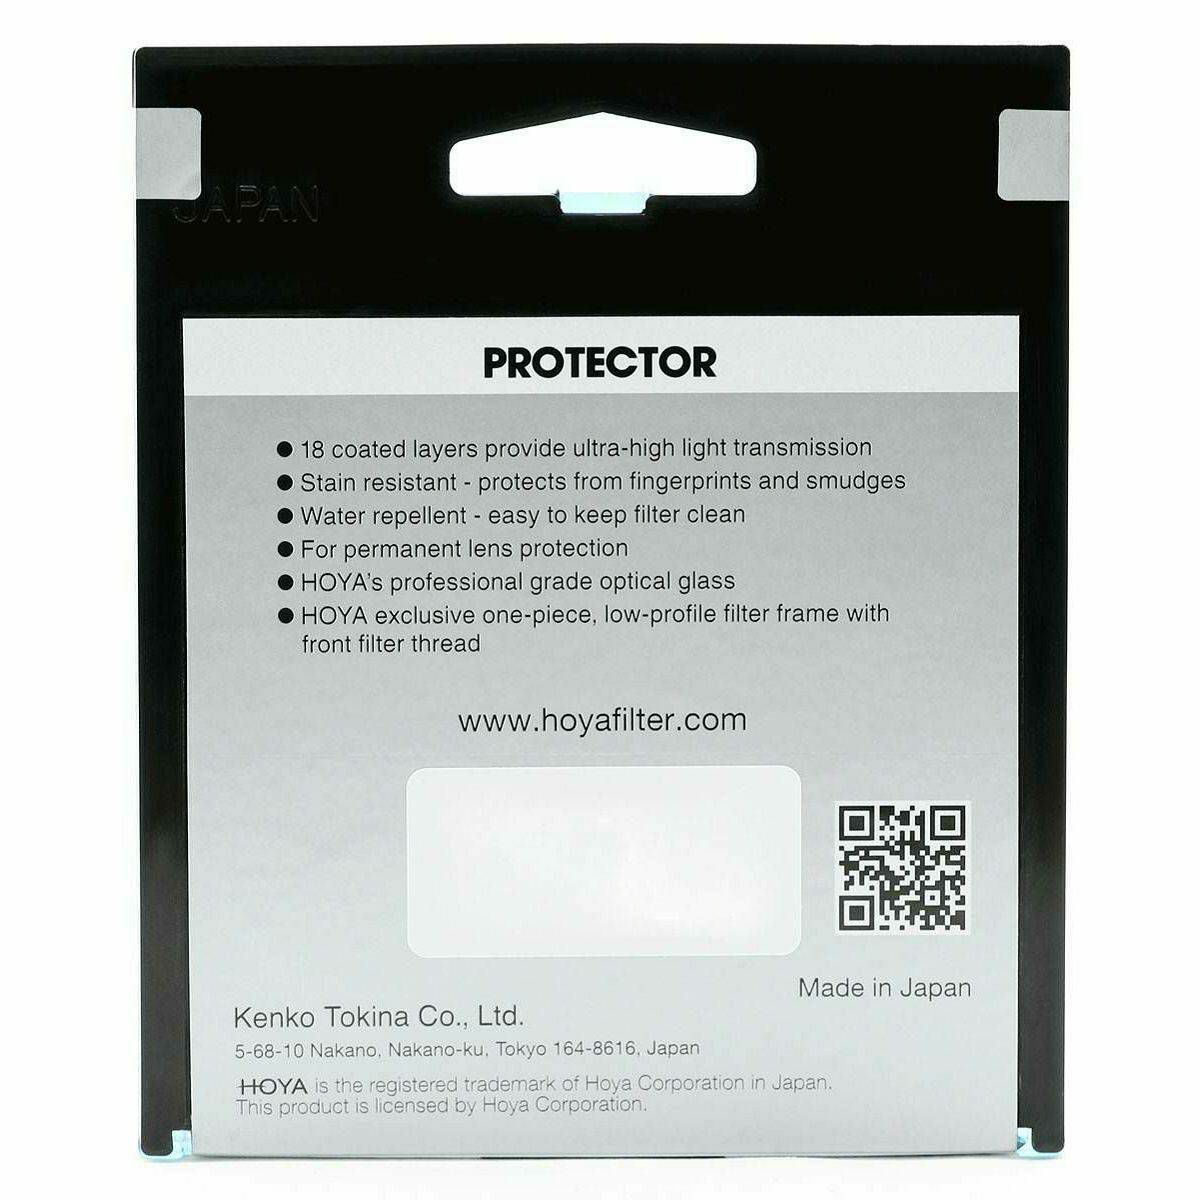 Hoya Fusion One Protector 67mm zaštitni filter